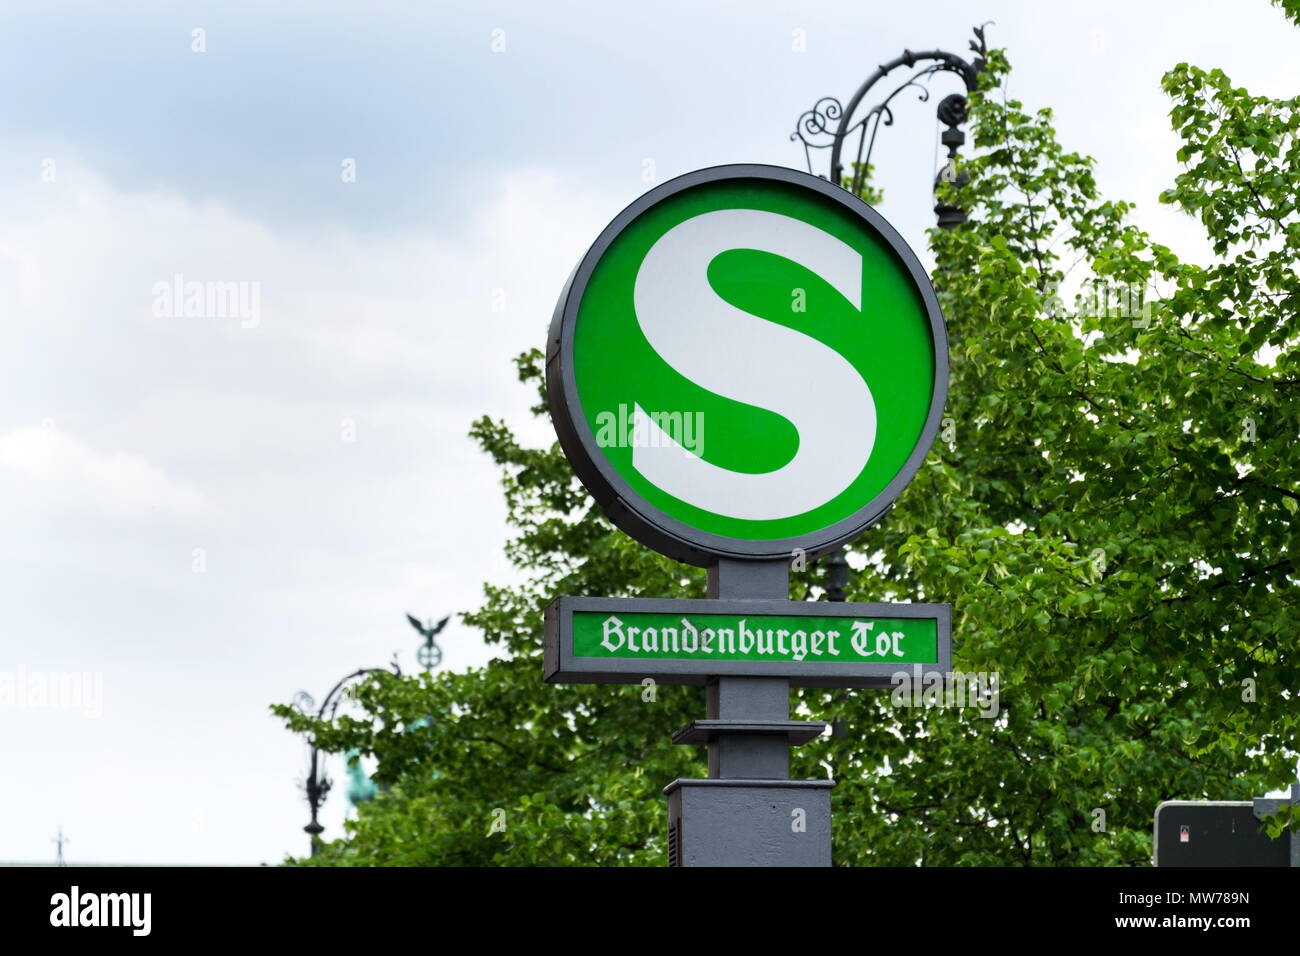 S-Bahn Brandenburger Tor sign, rapid transit railway, Berlin, Germany Stock Photo